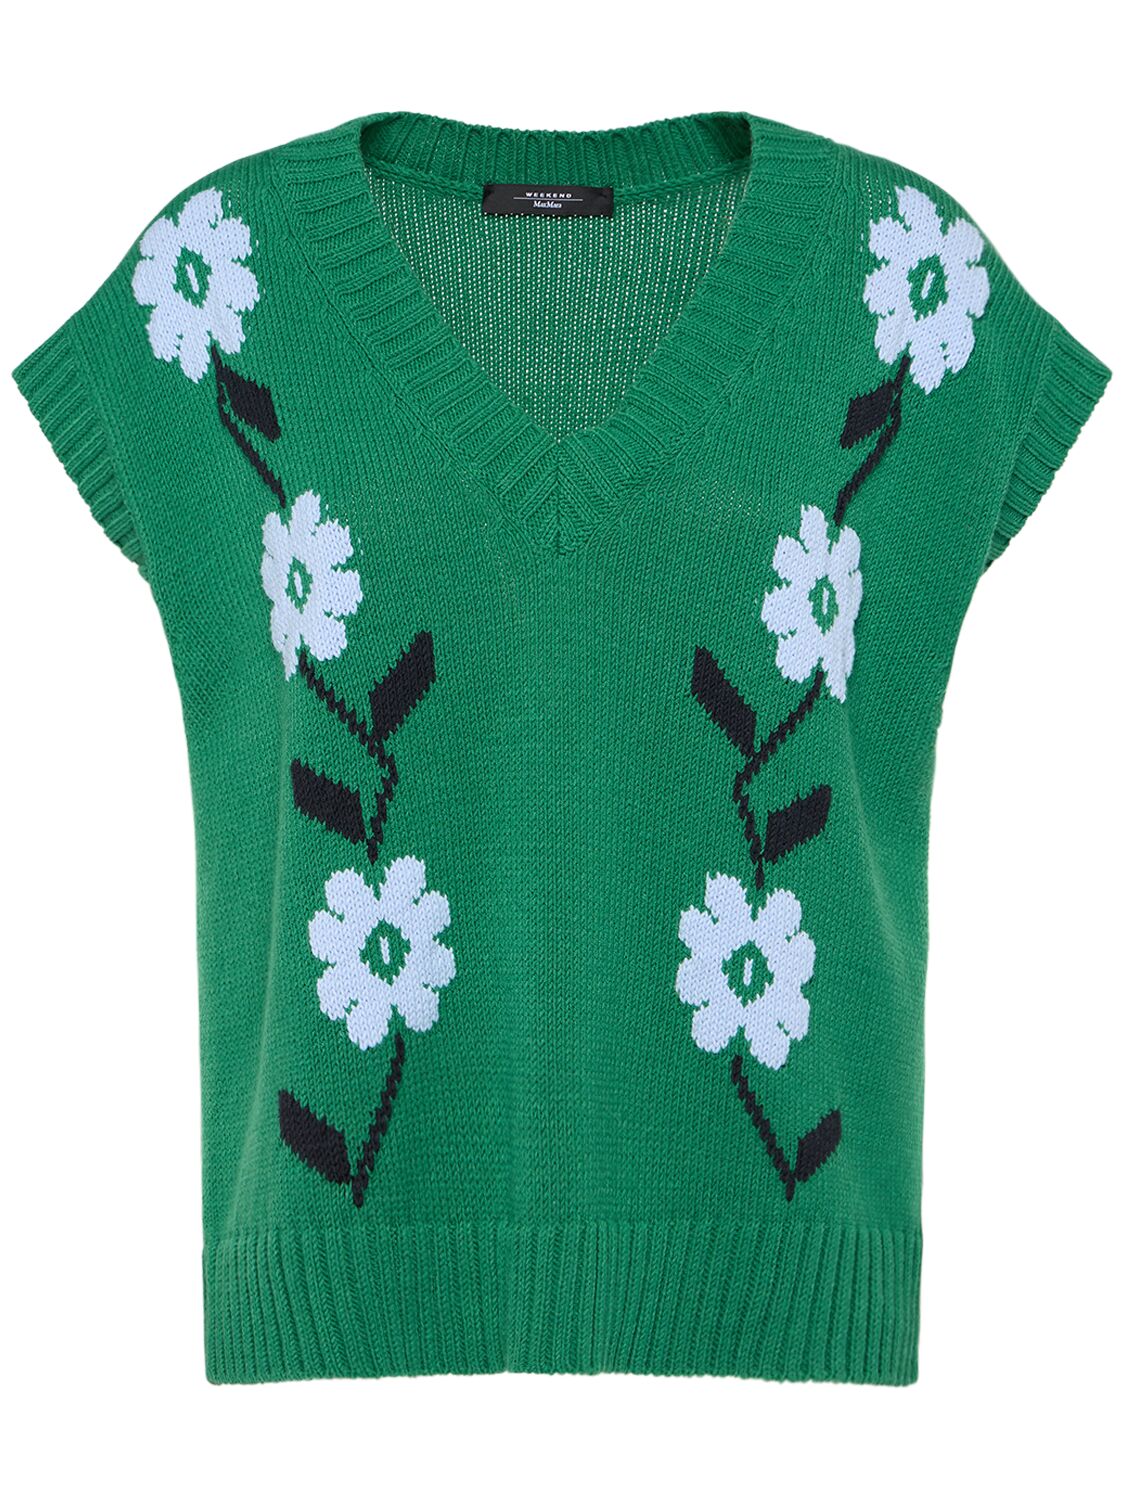 Weekend Max Mara Austria Embroidered Cotton Blend Waistcoat In Green/multi